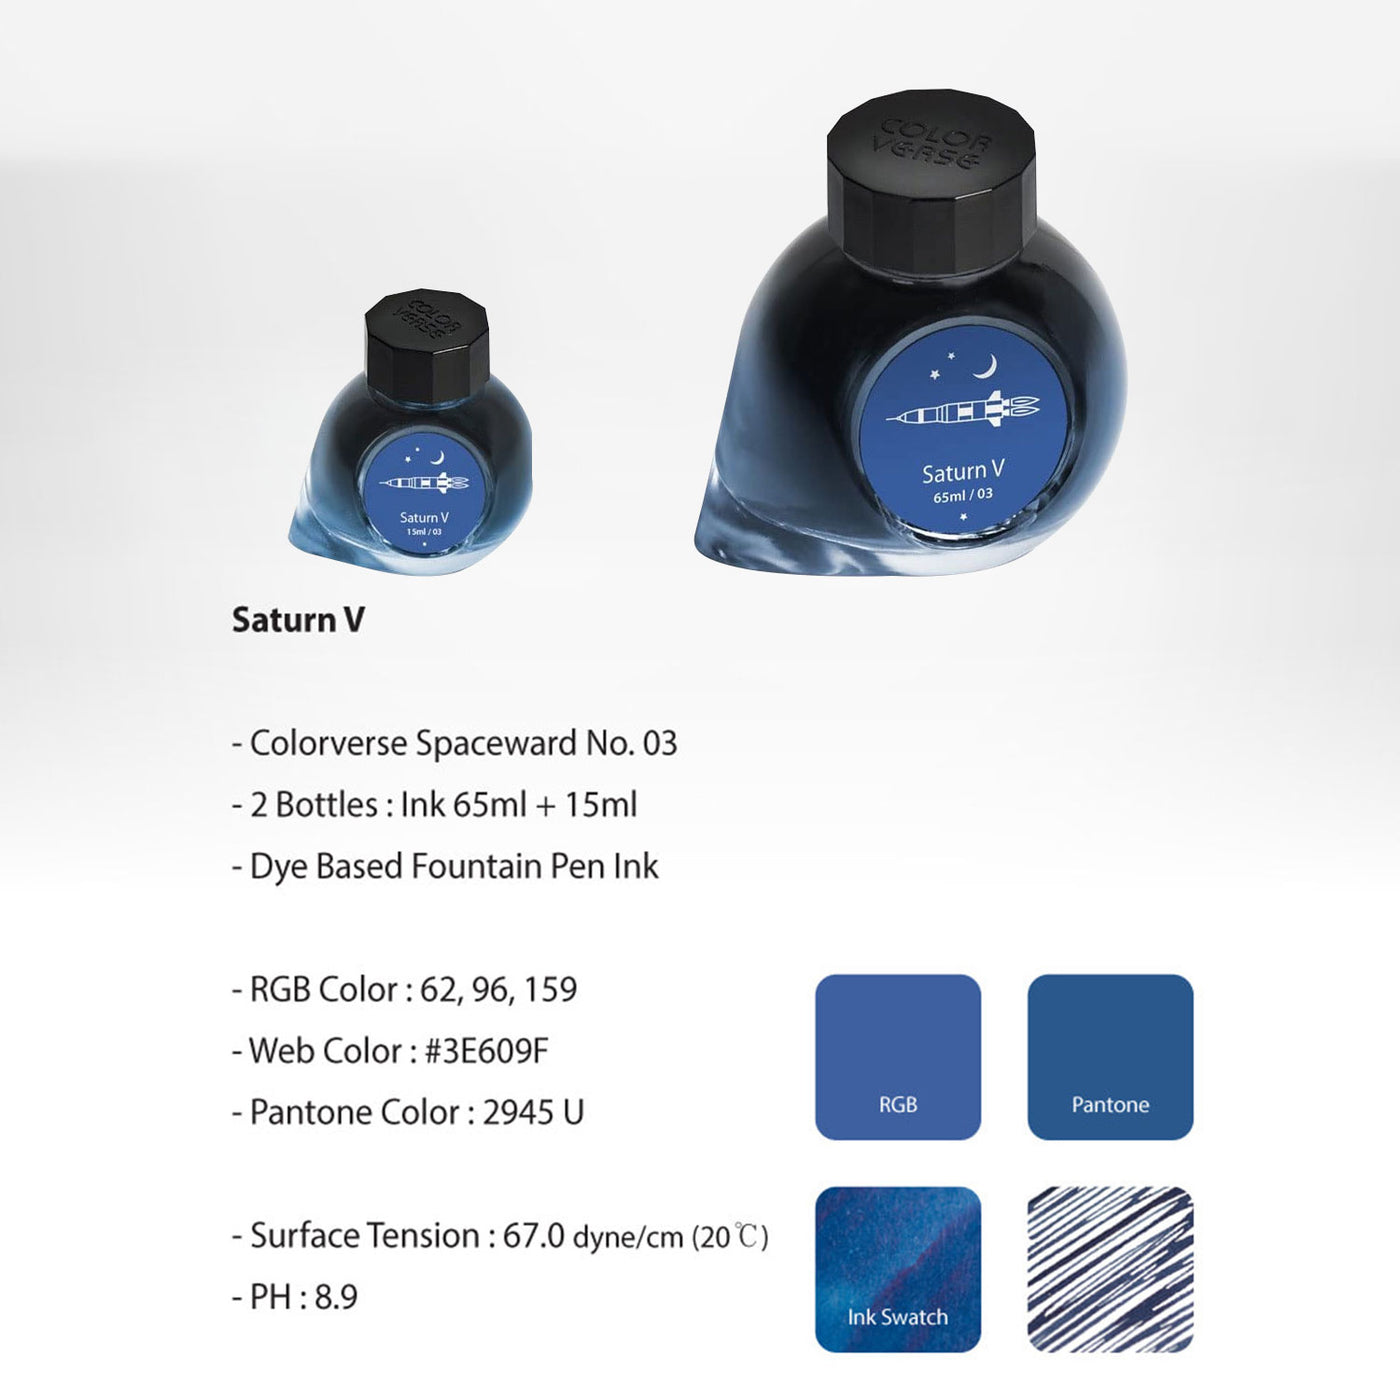 Colorverse Spaceward Saturn V Ink Bottle Dark Blue - 65ml + 15ml 2